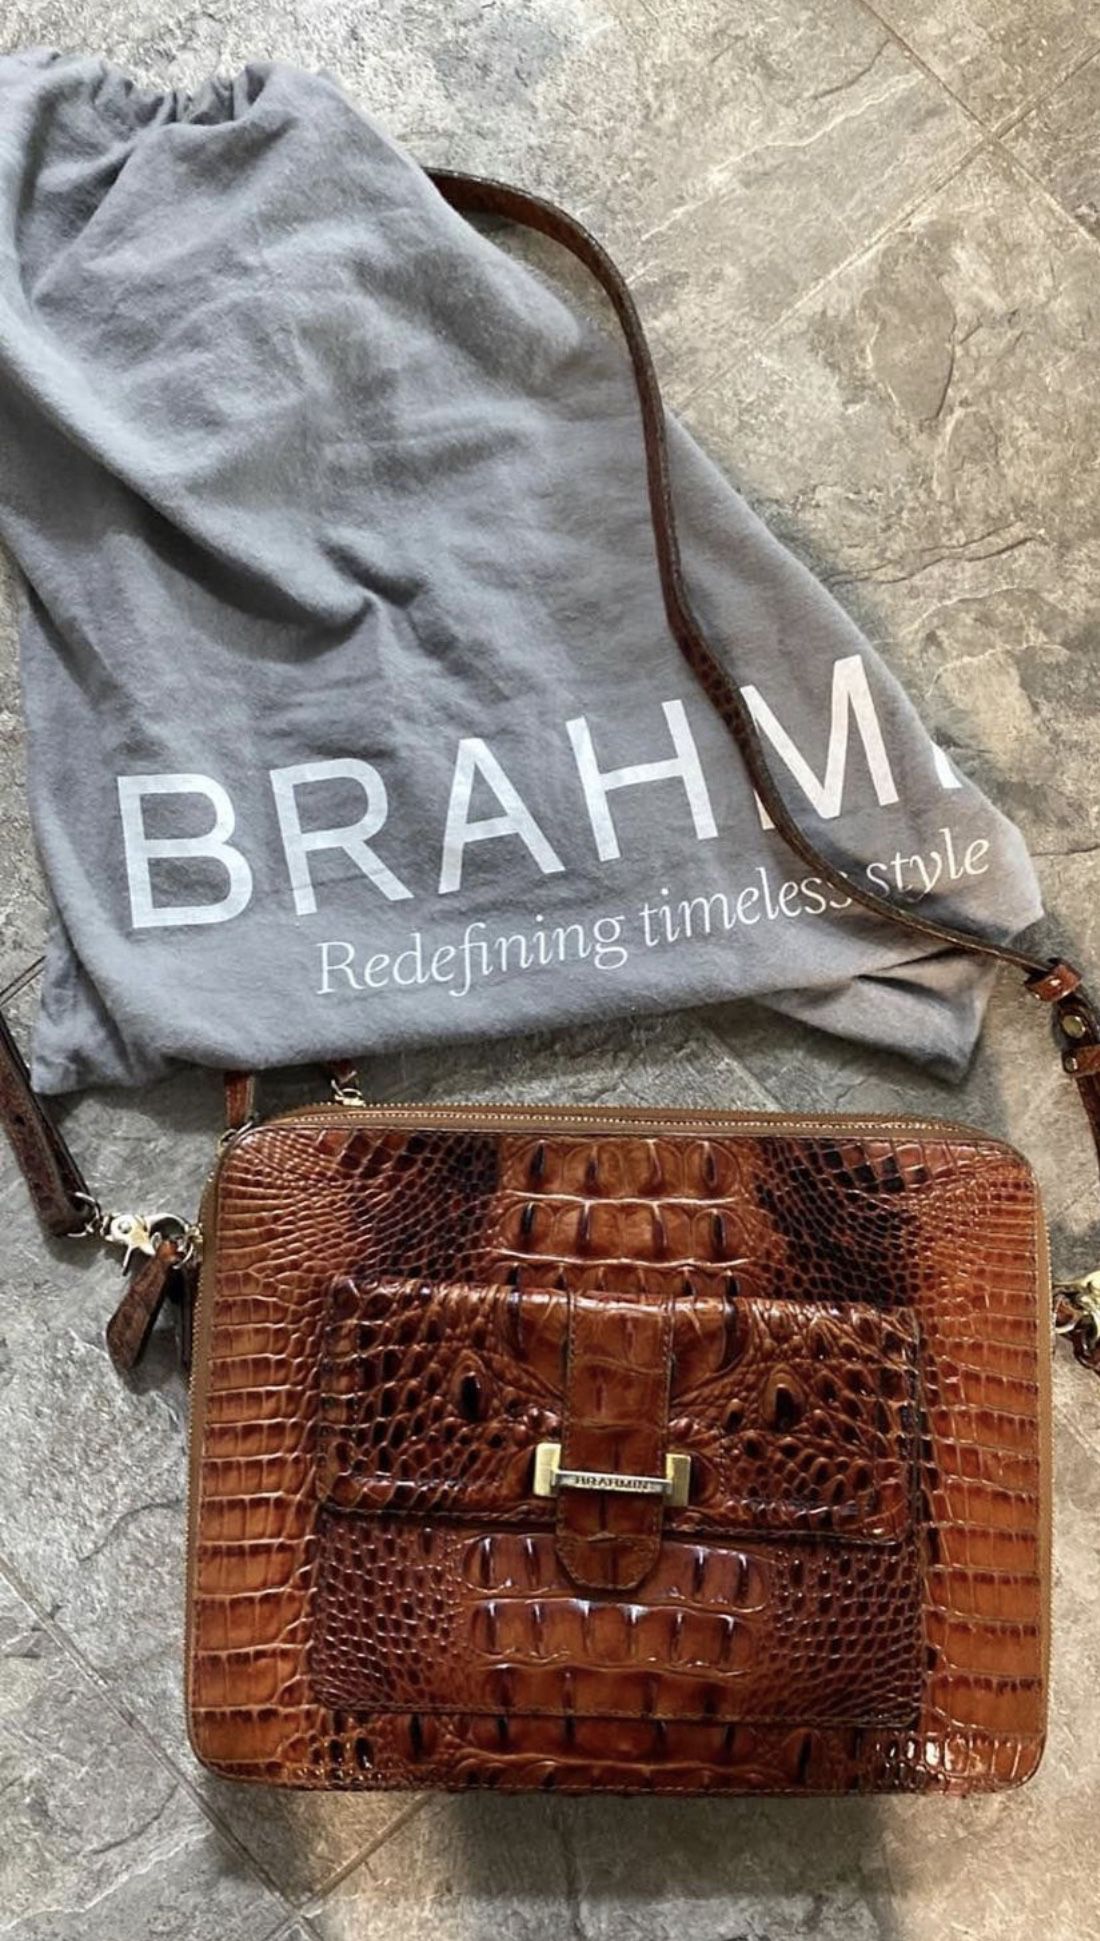 Brahmin Purses for sale in Washington D.C.